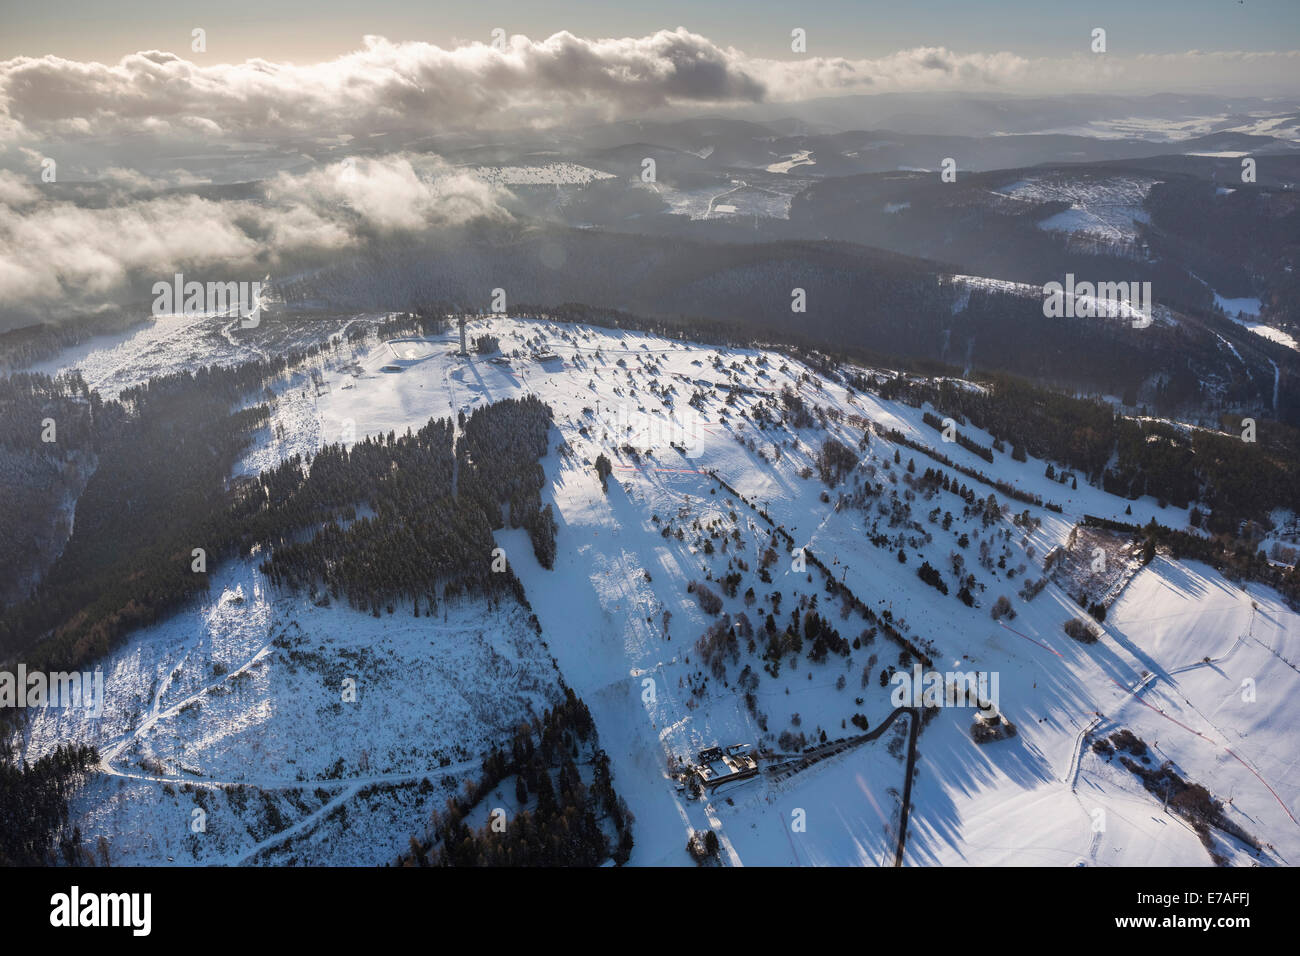 https://c8.alamy.com/comp/E7AFFJ/willingen-effelsberg-ski-resort-aerial-view-willingen-upland-hesse-E7AFFJ.jpg